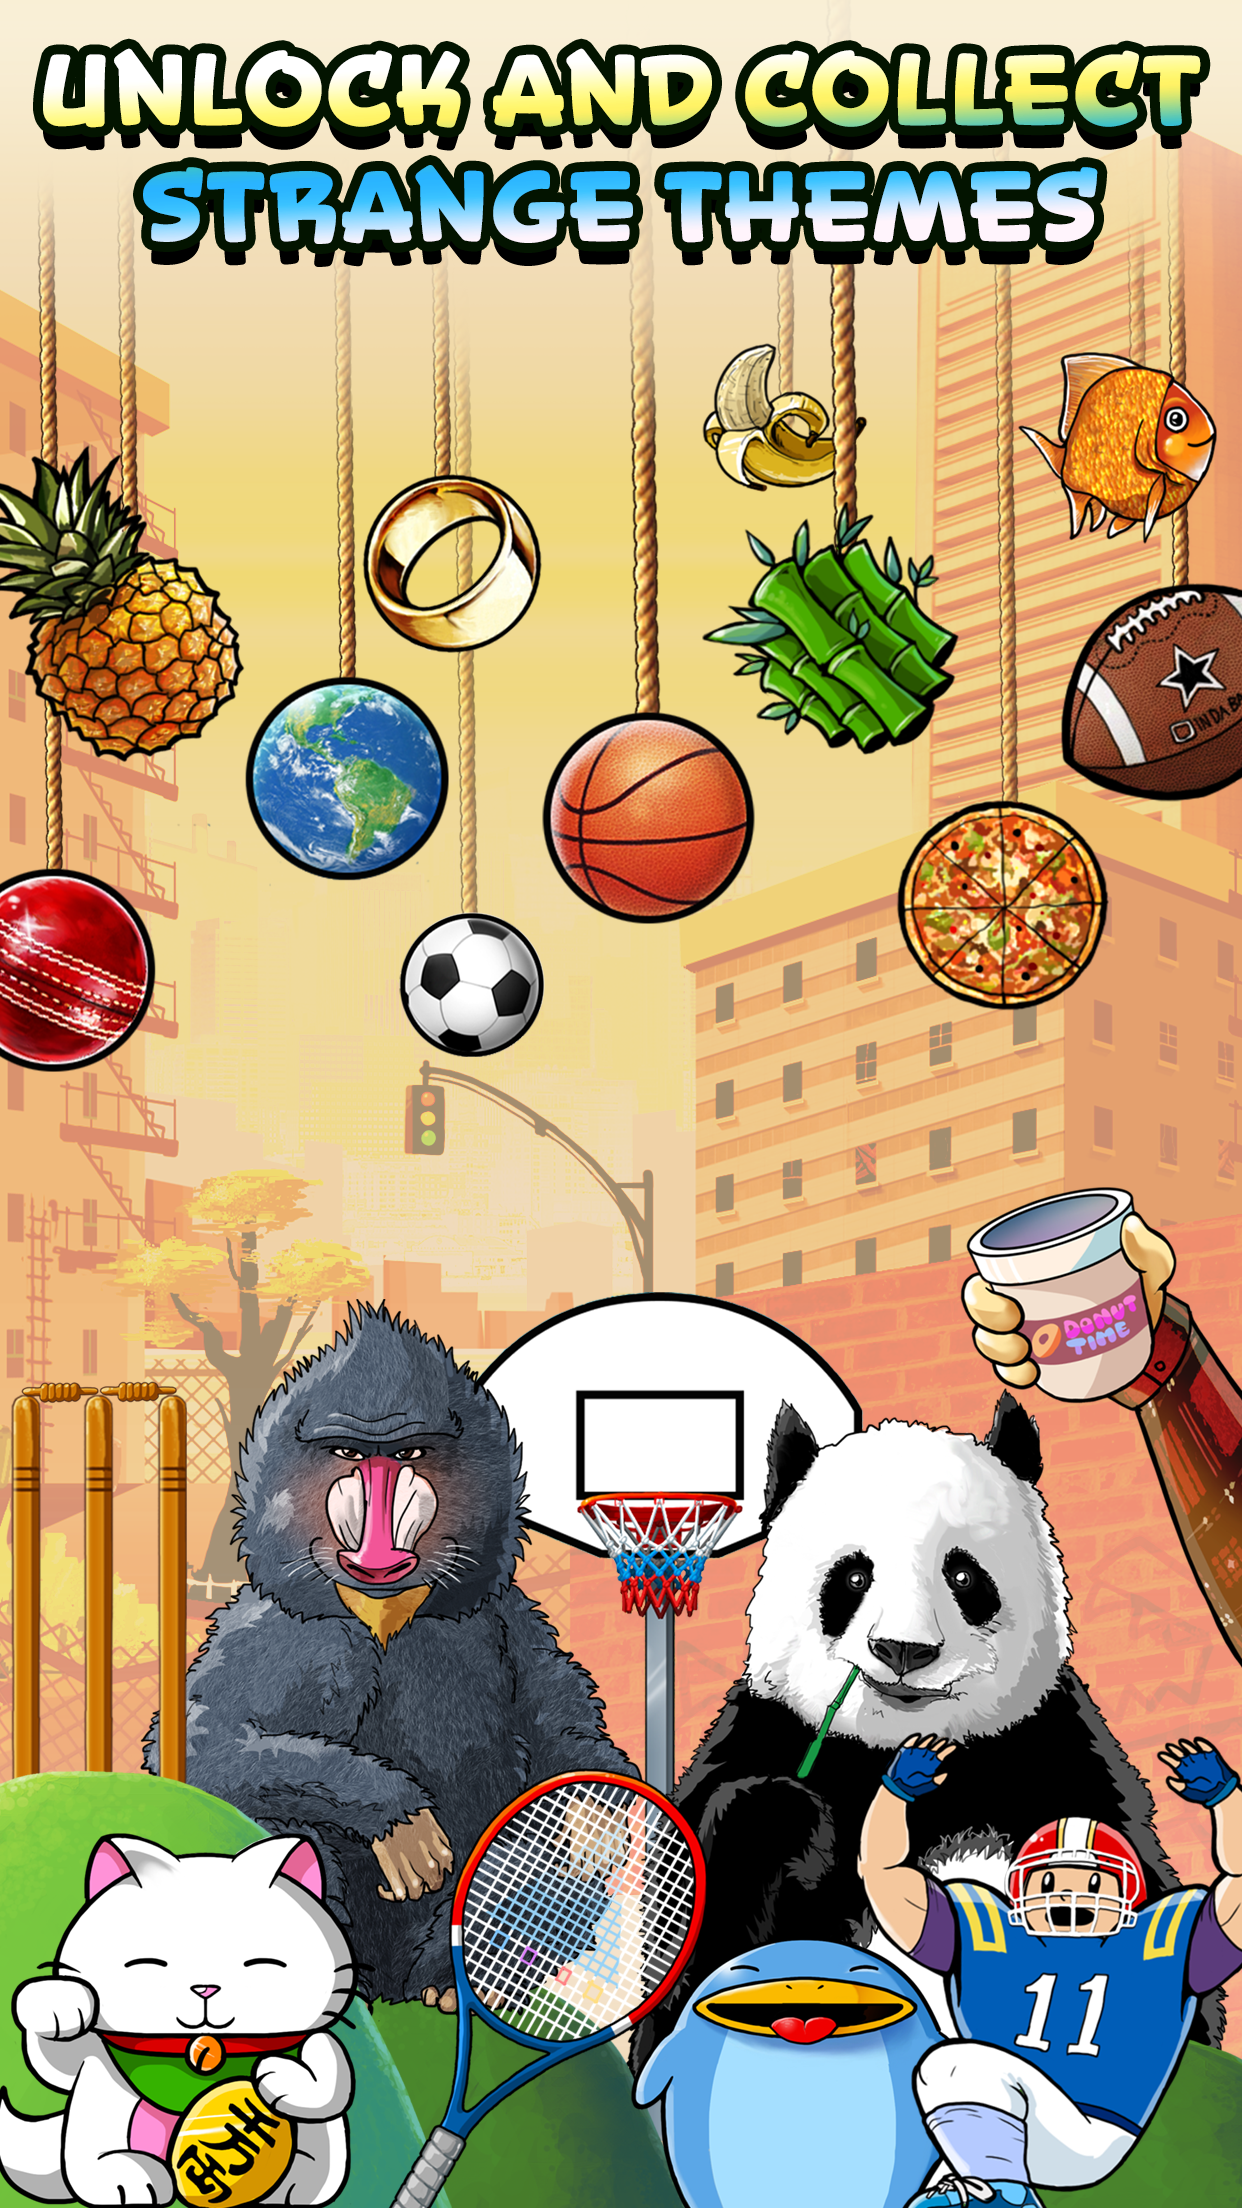 Android application Basket Fall screenshort